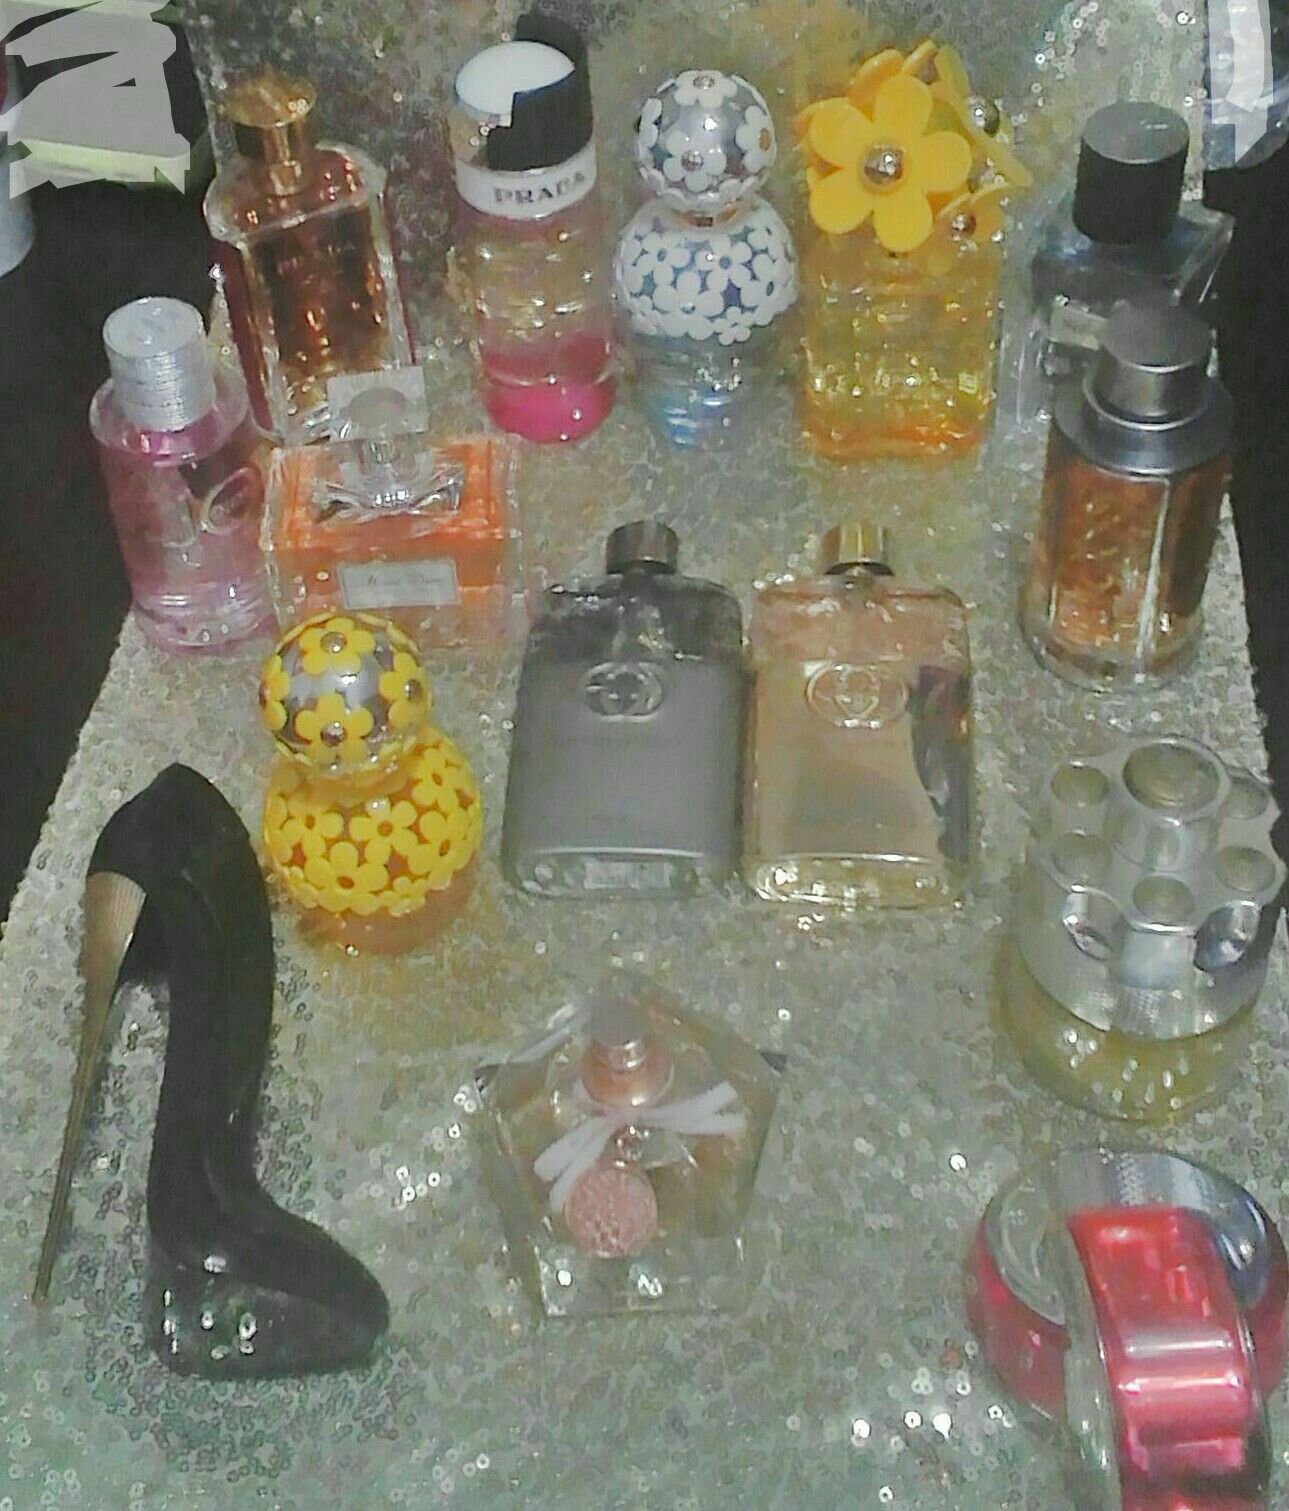 Perfumes & Colognes